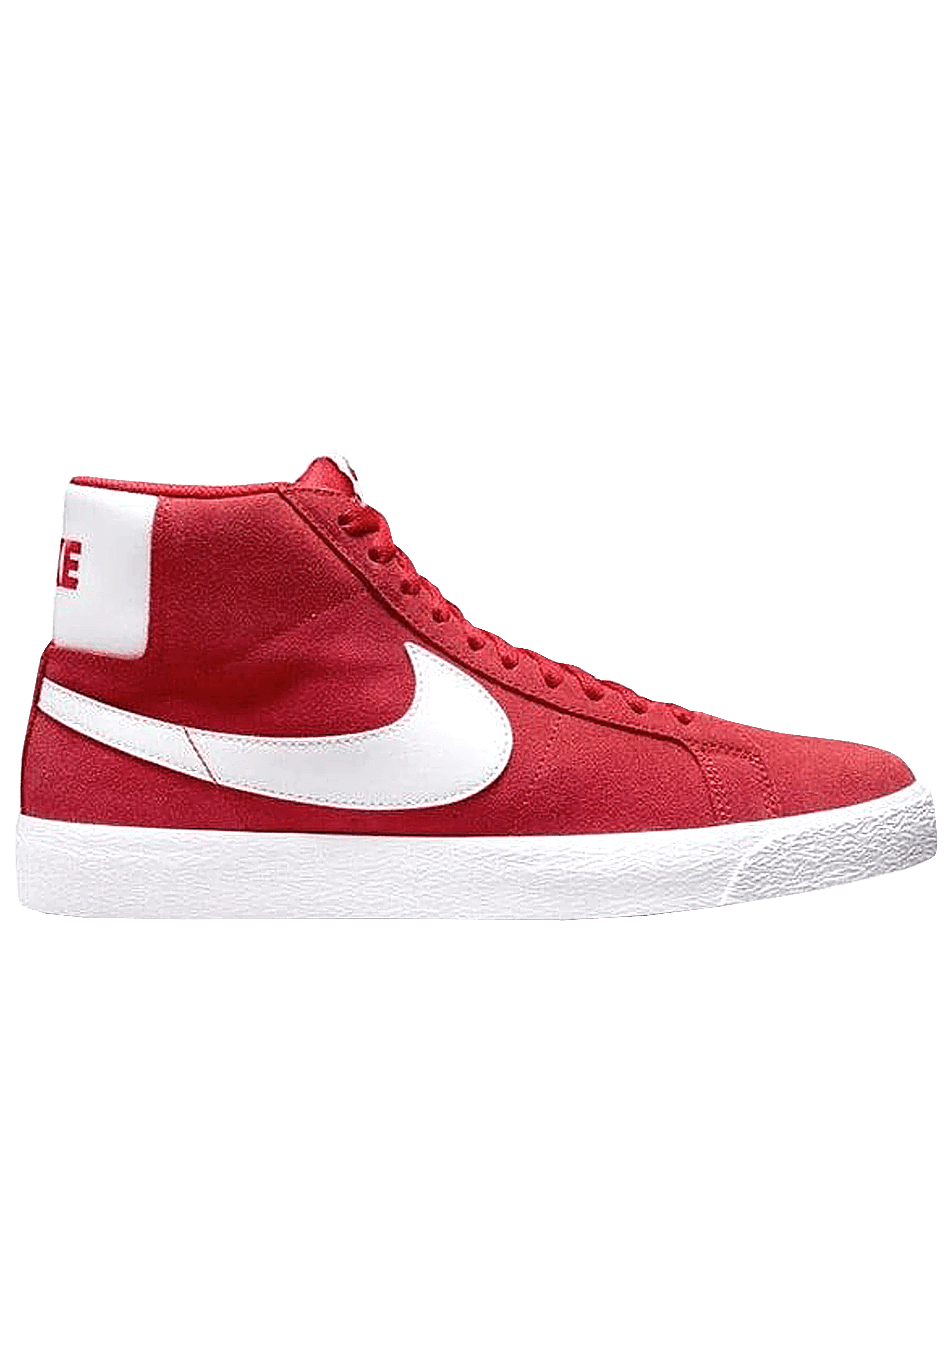 Shop Red Nike Online